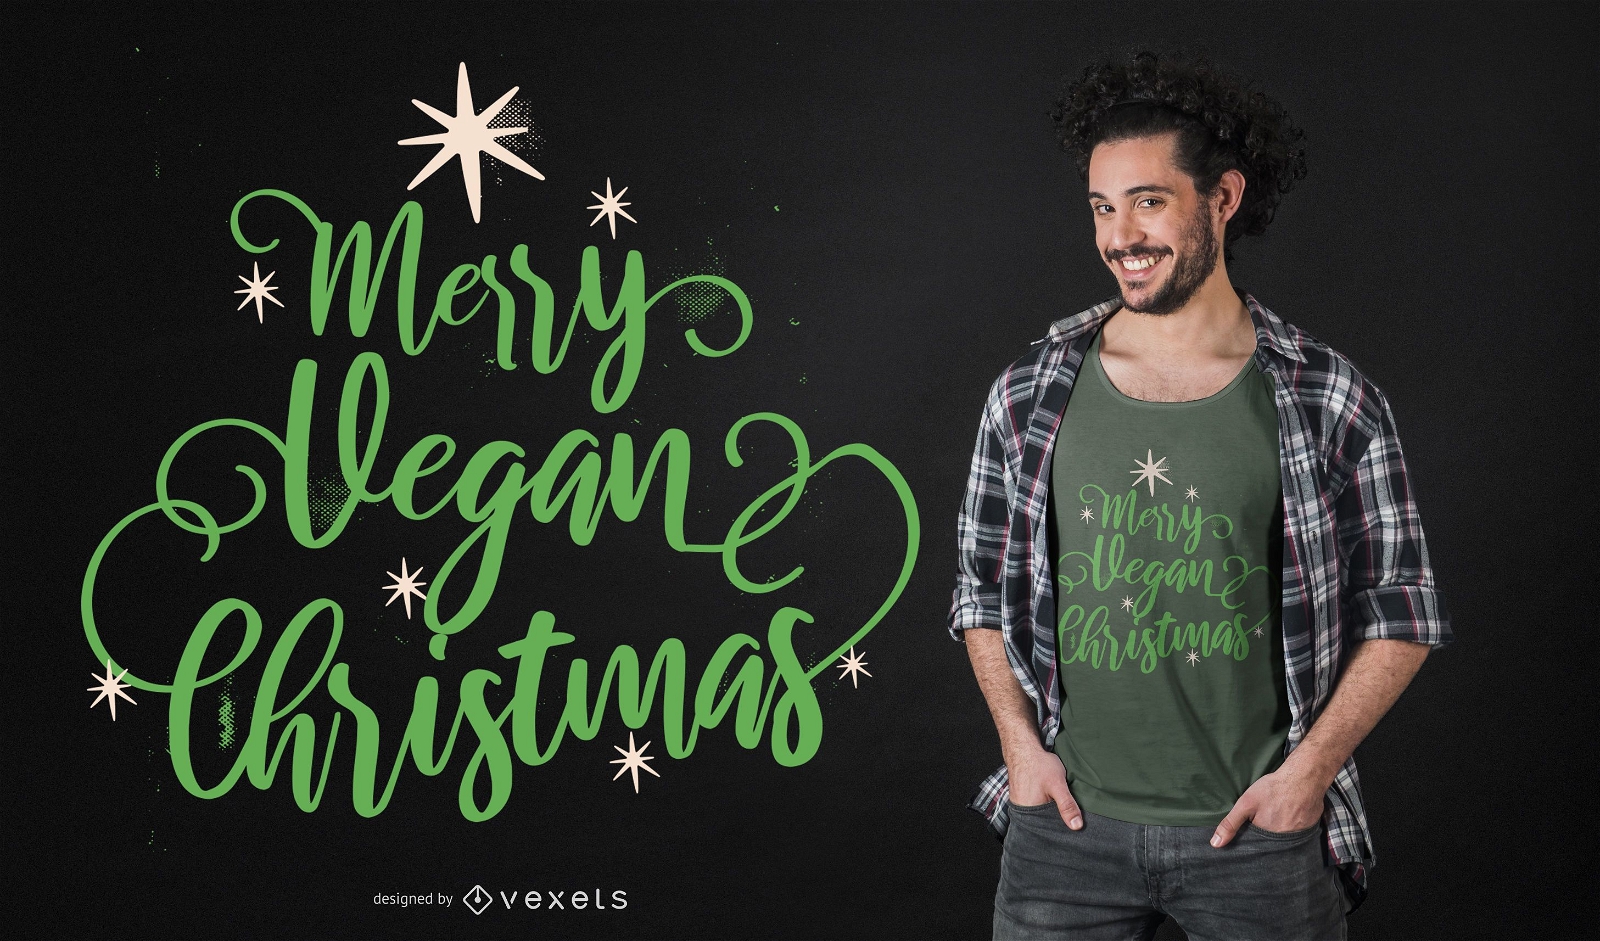 Merry vegan christmas t-shirt design